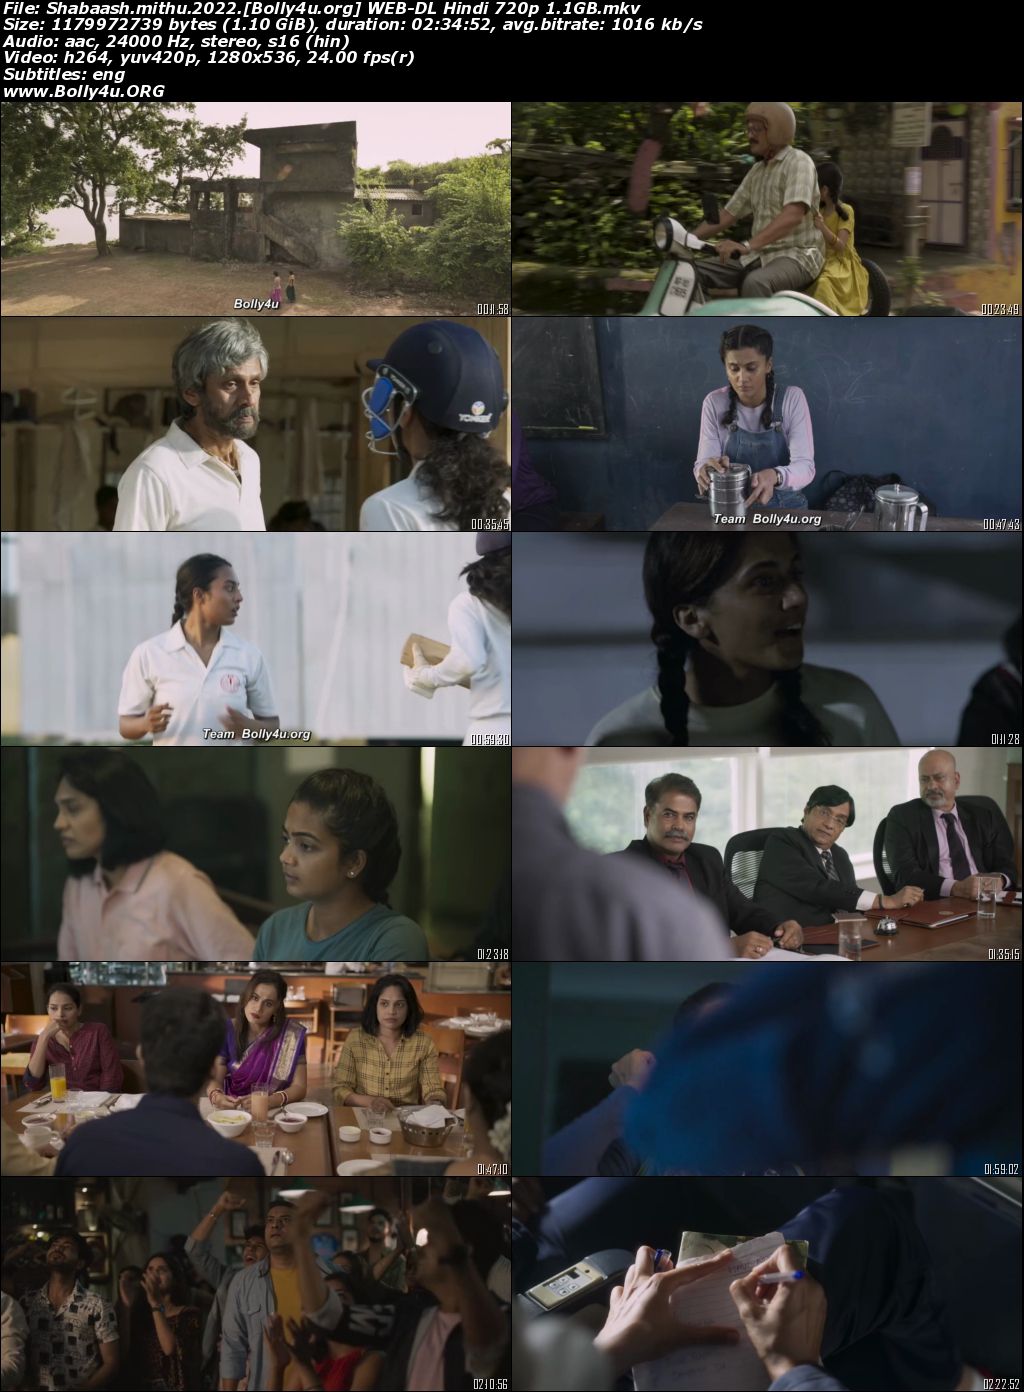 Shabaash Mithu 2022 WEB-DL Hindi Full Movie Download 1080p 720p 480p